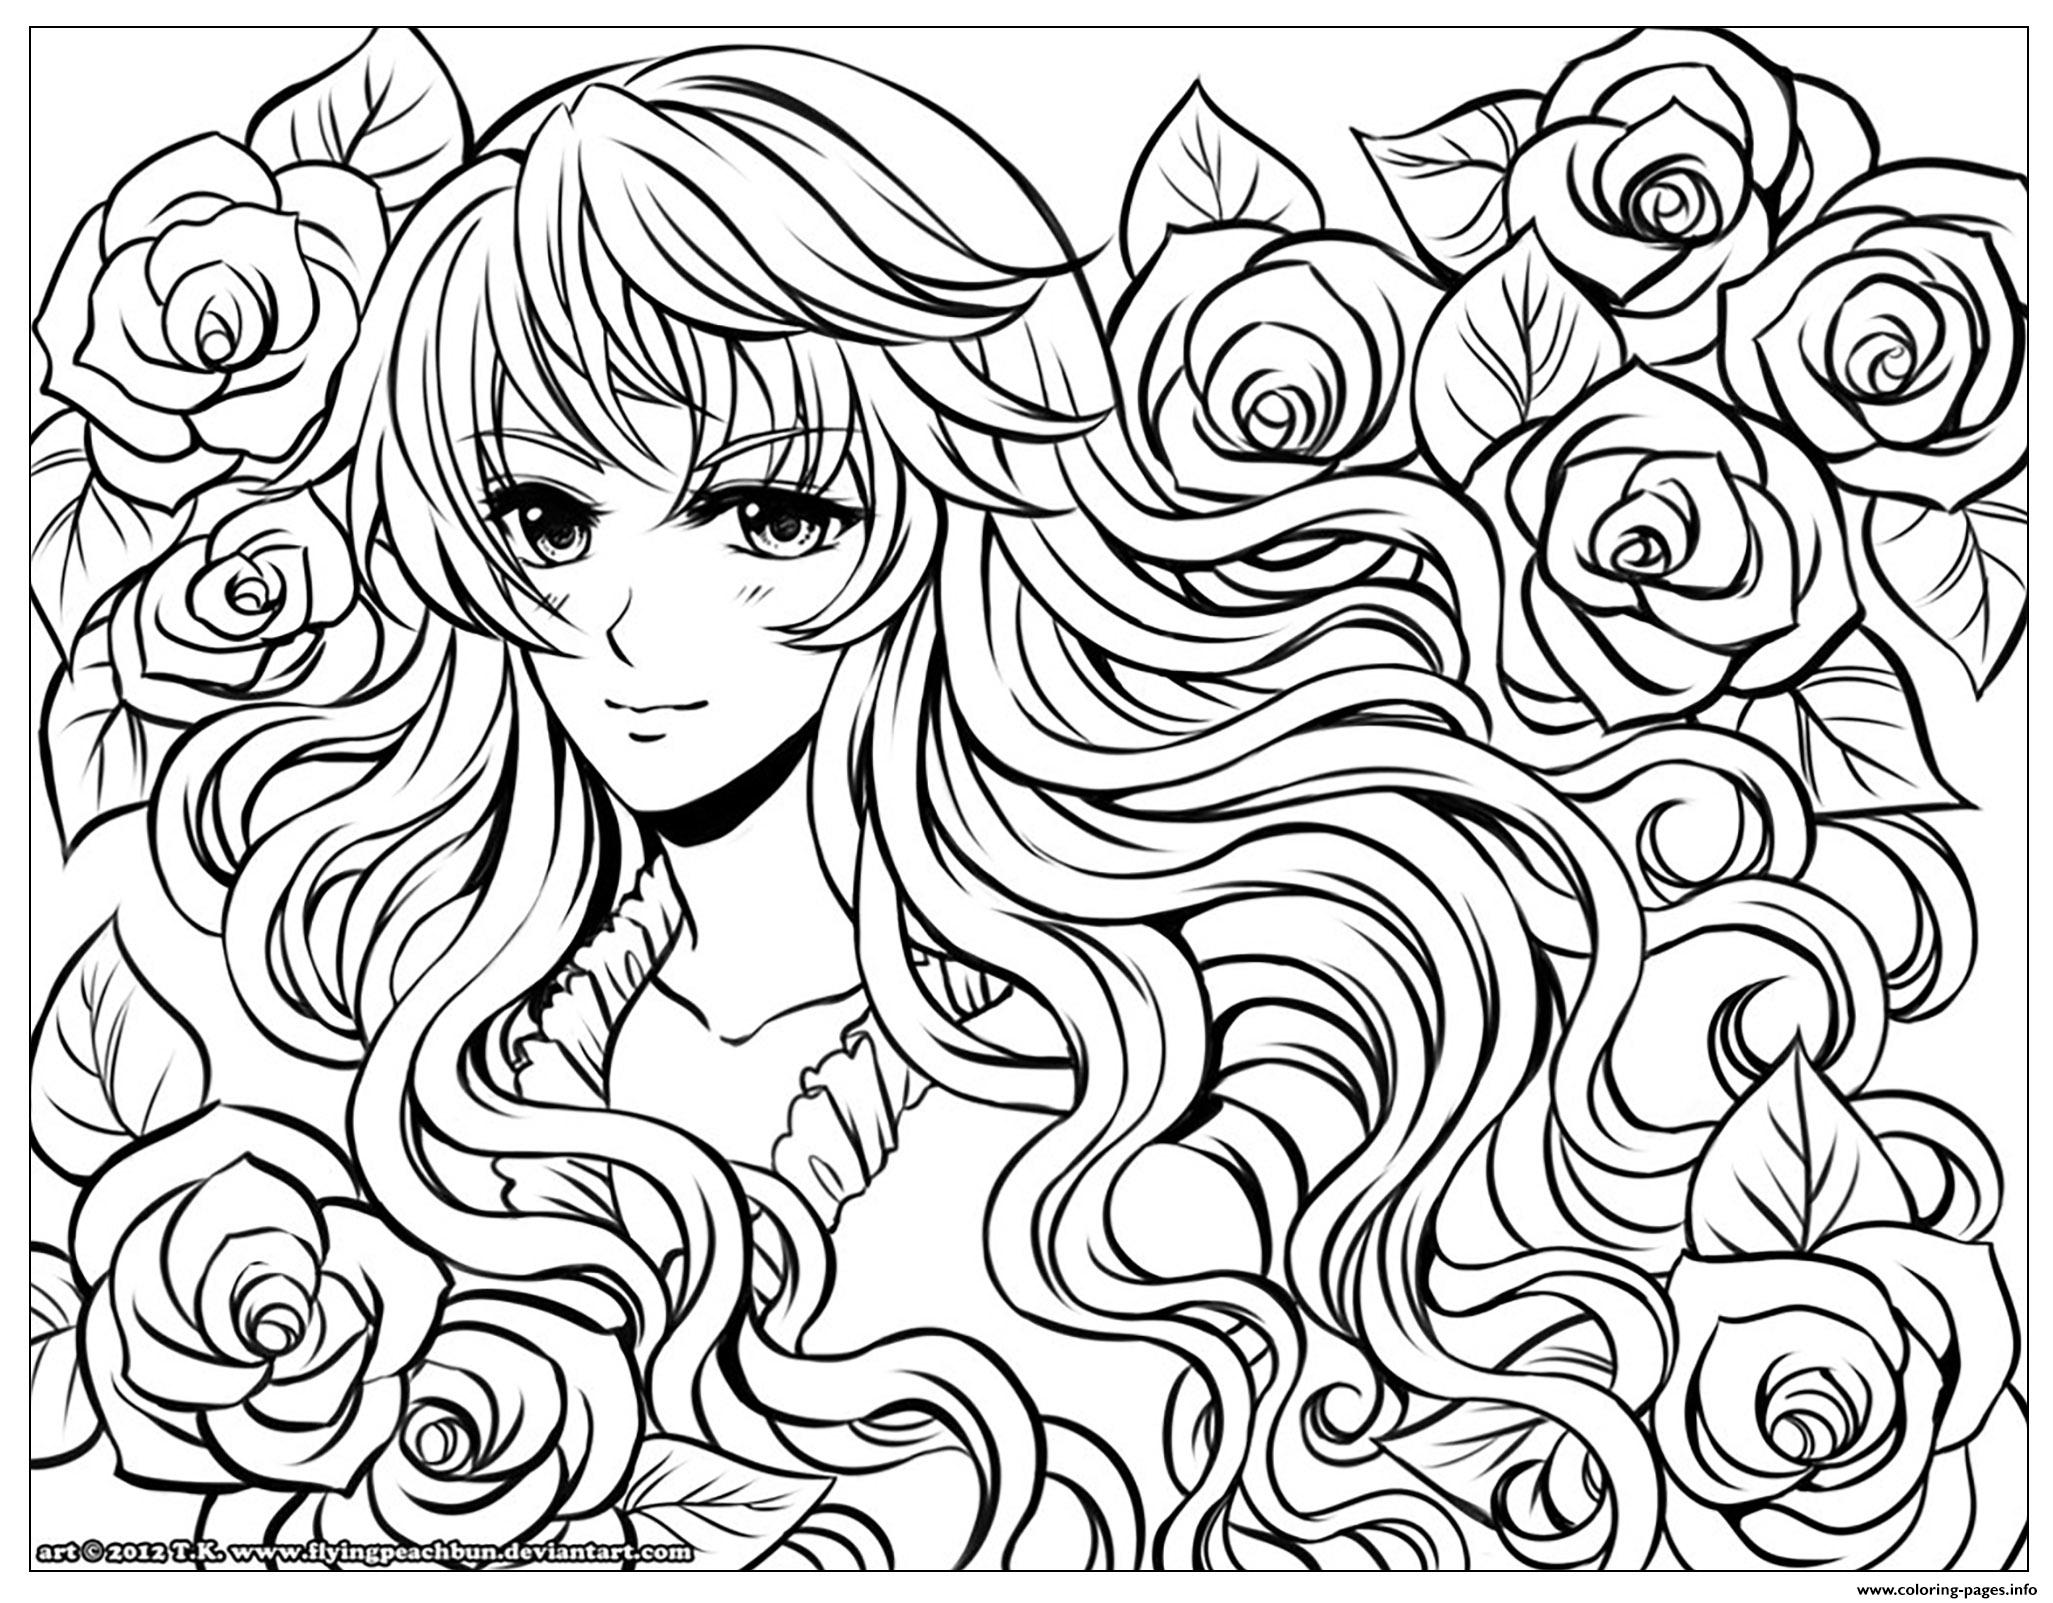 Manga Girl With Flowers By Flyingpeachbun coloring